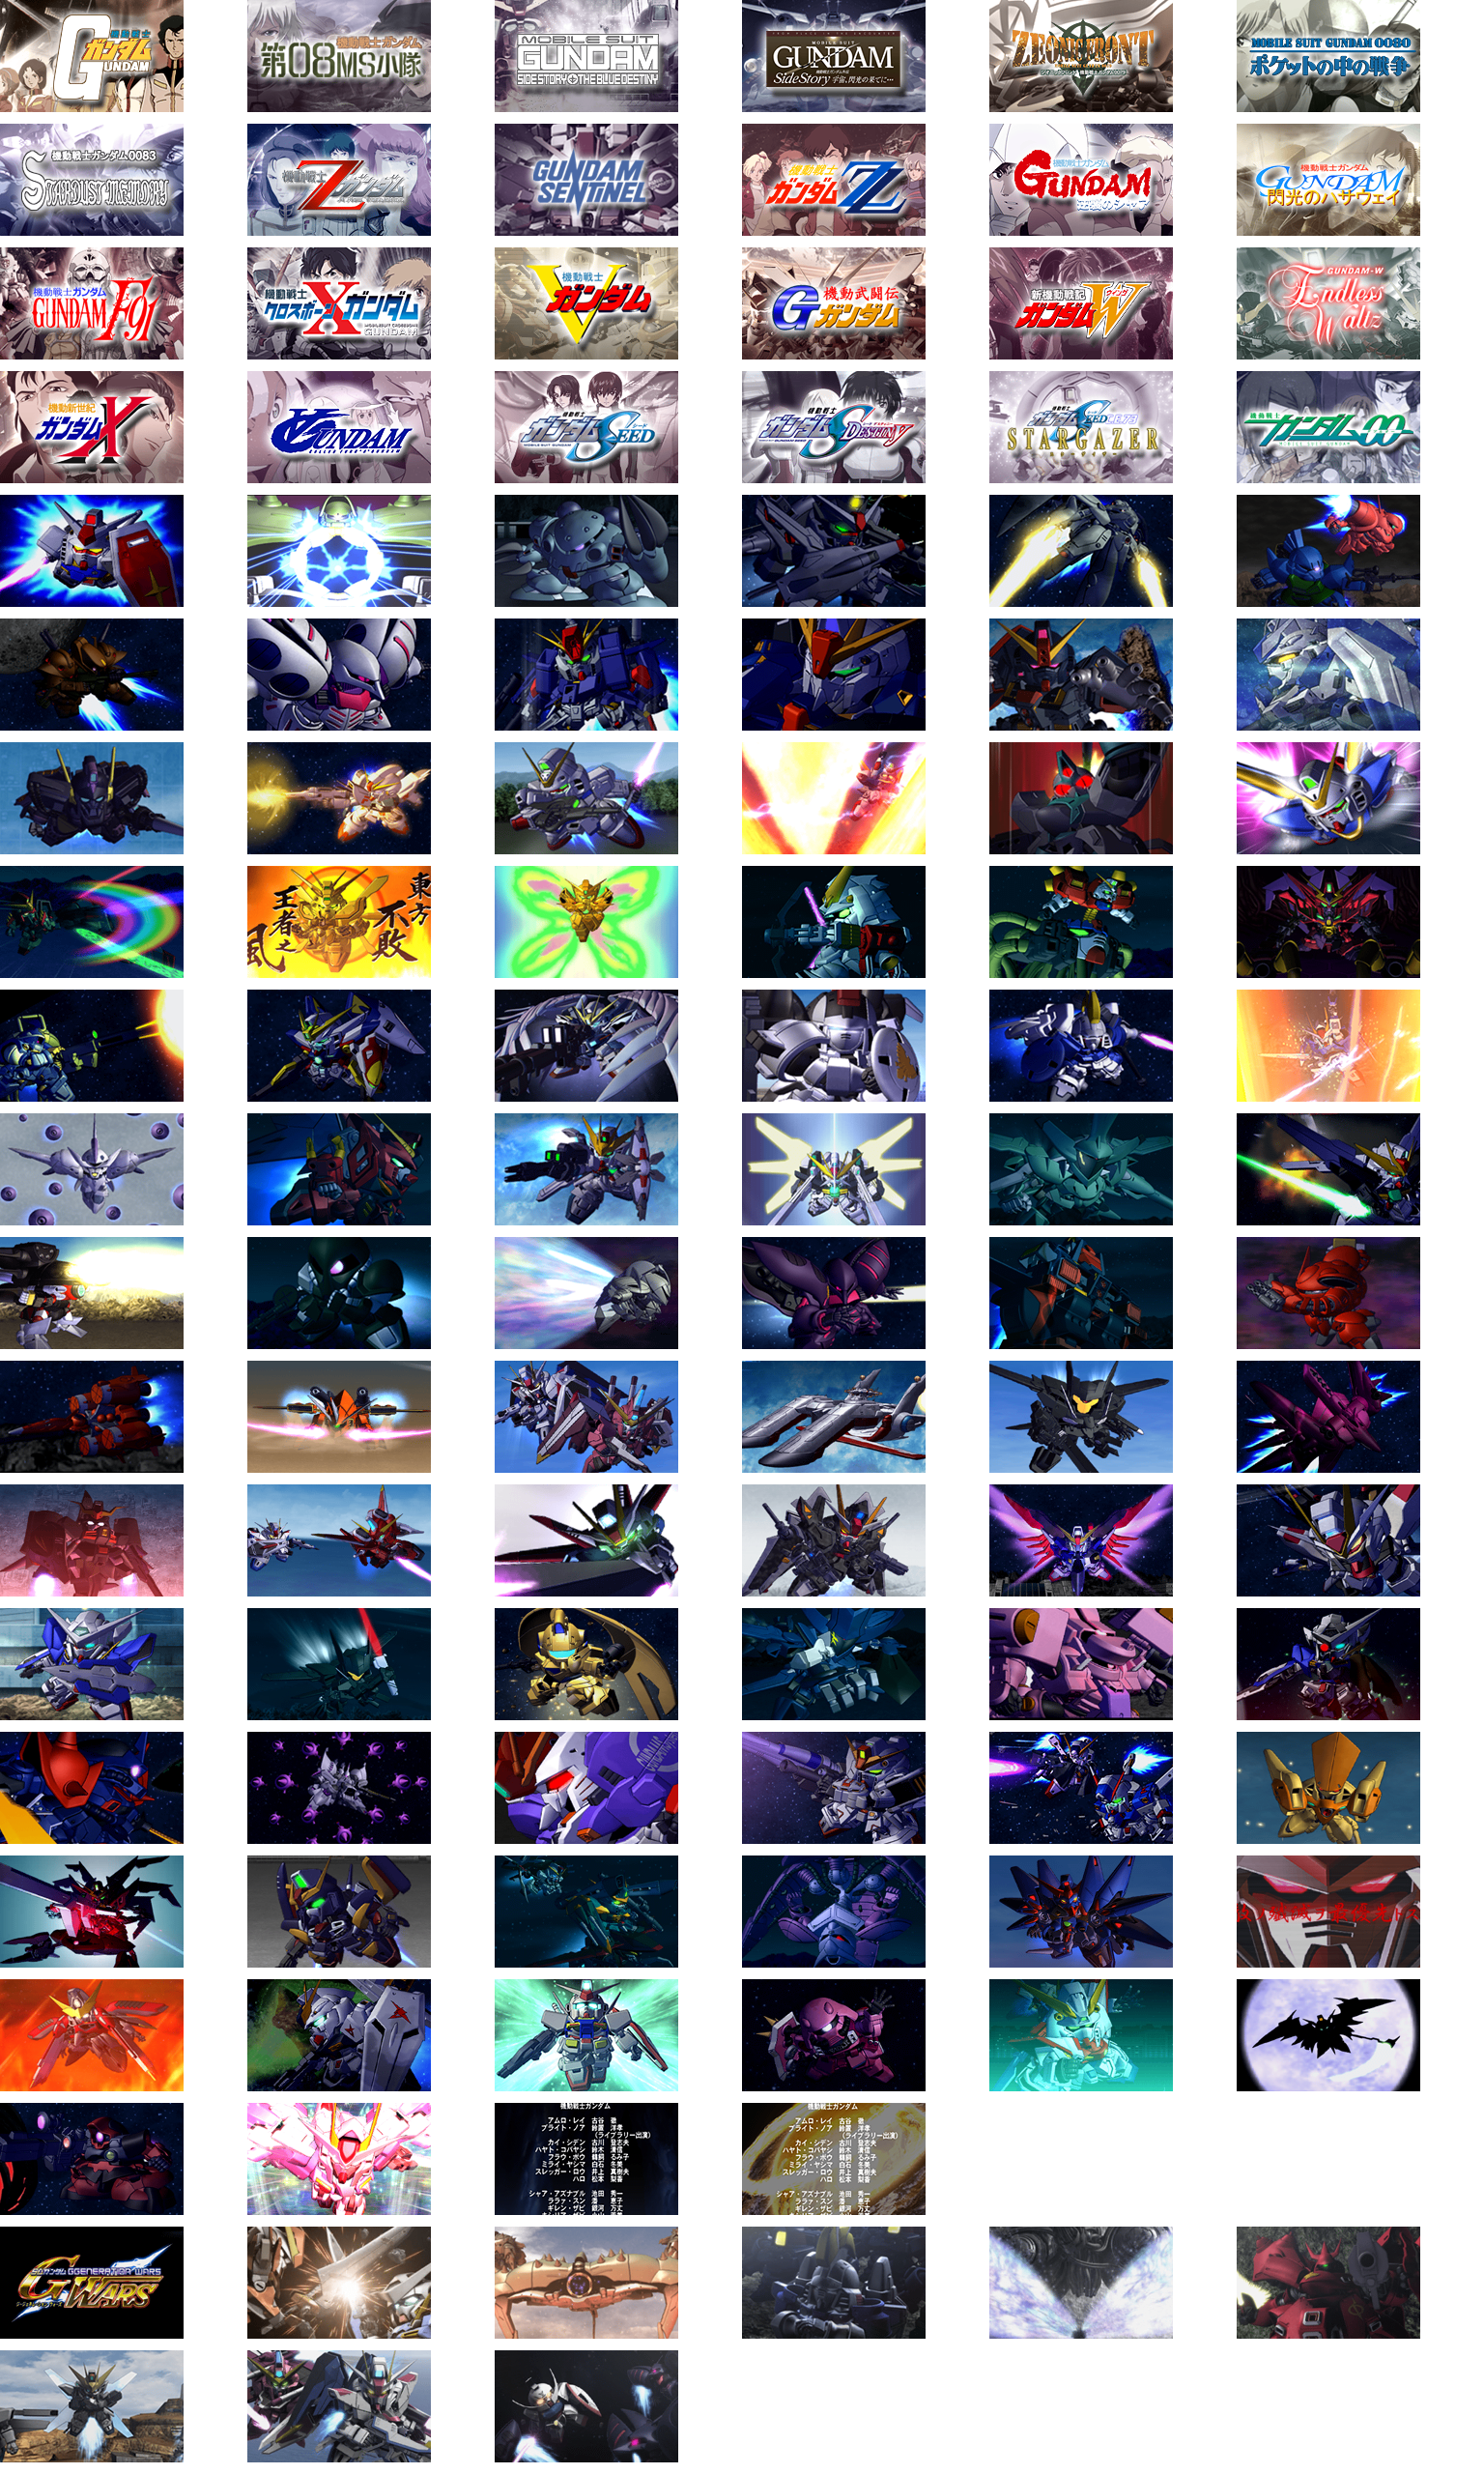 SD Gundam G Generation Wars - Gallery Icons